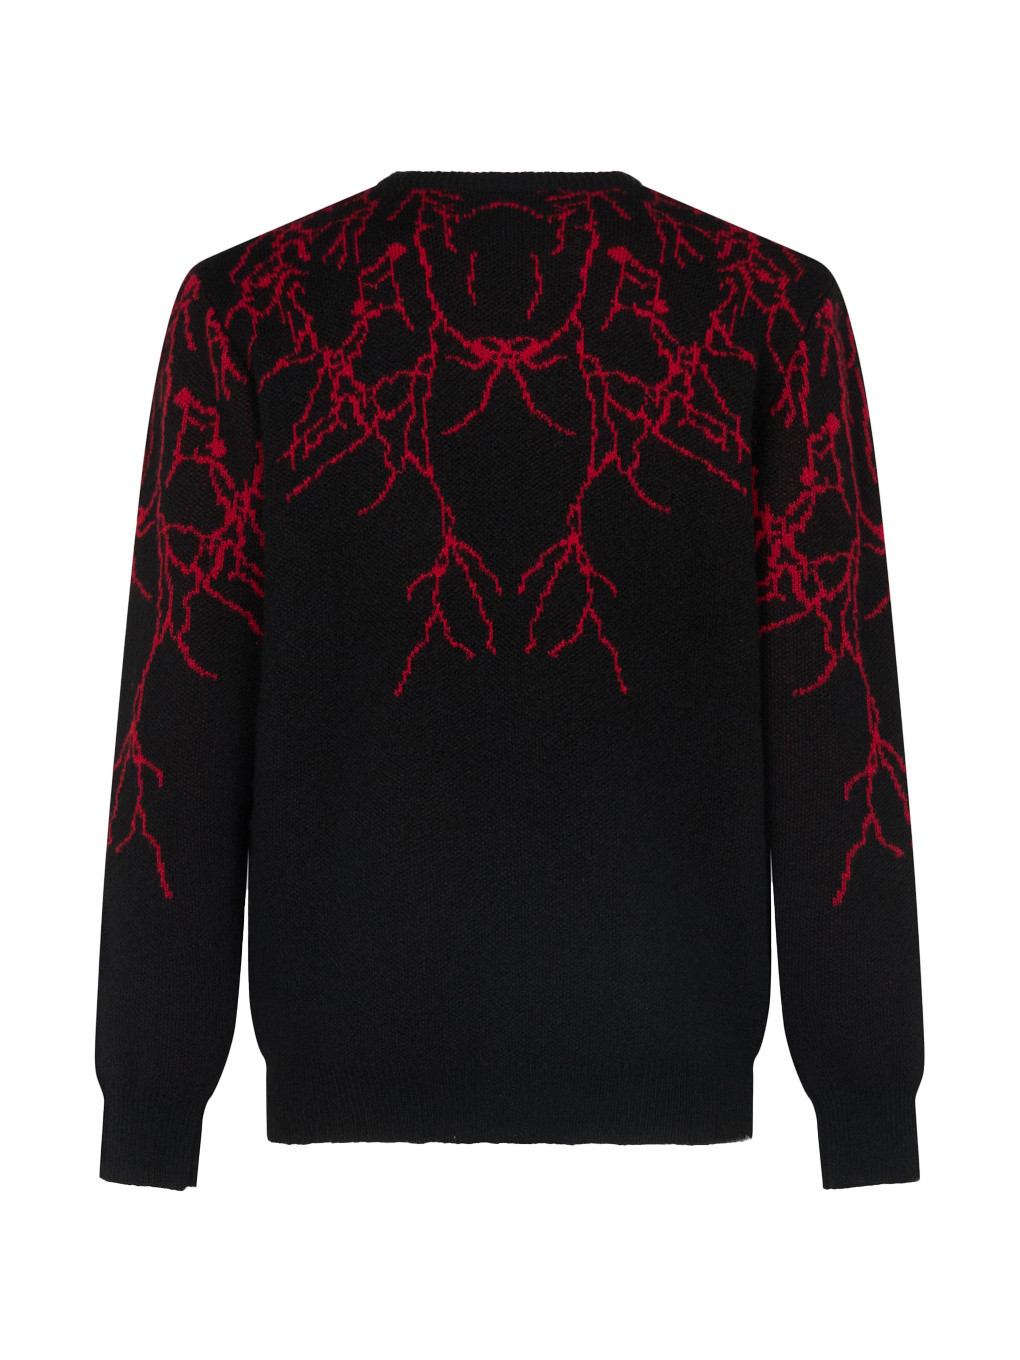 Phobia - Lightning bolt sweater, Black, large image number 3